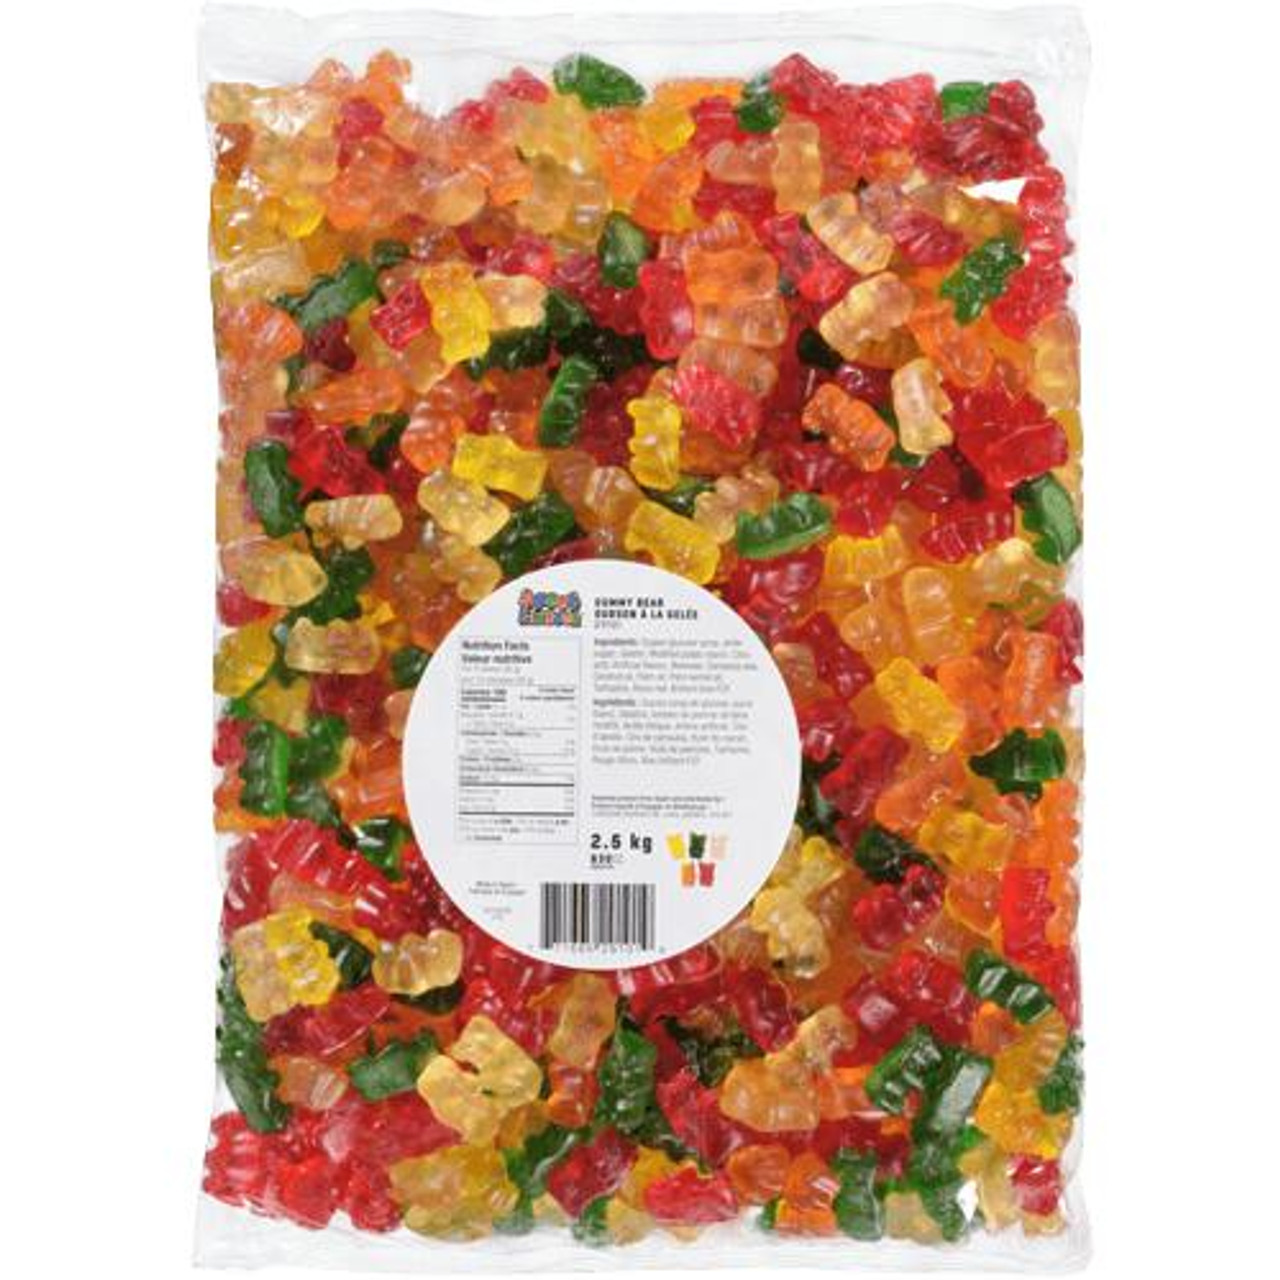  MONDOUX Gummy Bear 2.5kg/5.51lbs - Bursting with Flavorful Gummy Goodness 